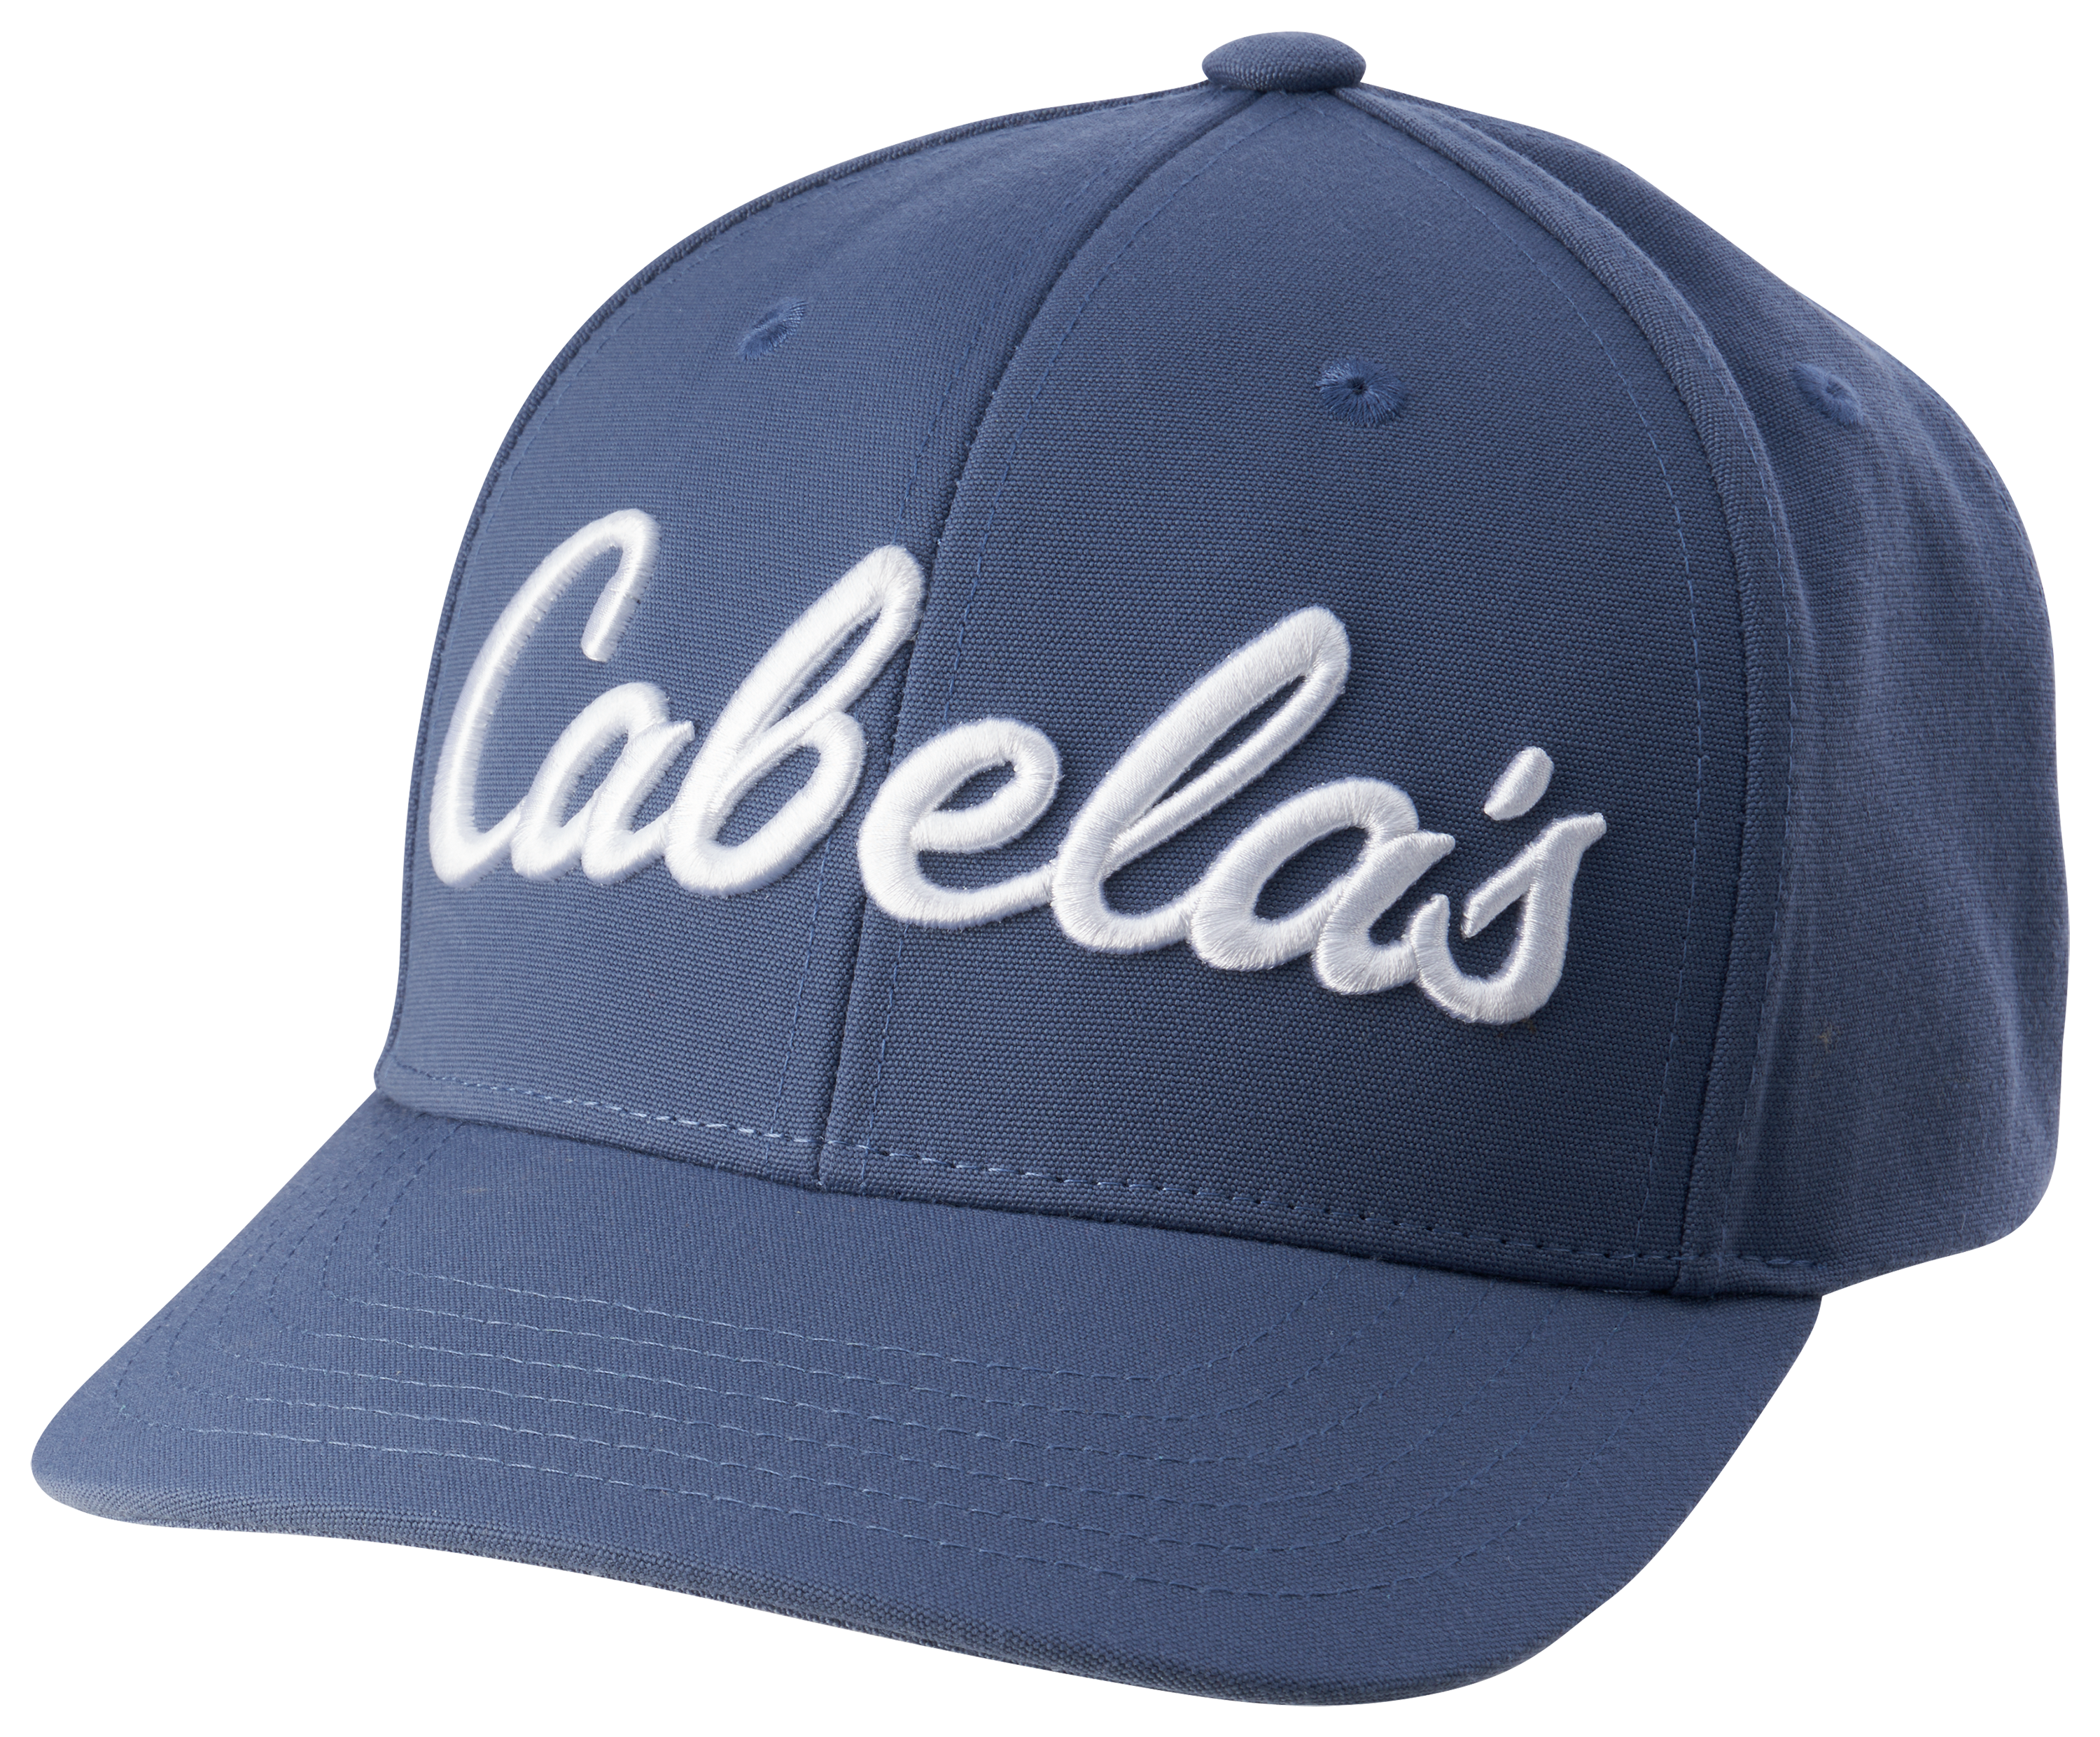 Cabela's Distressed Oval Patch Cap